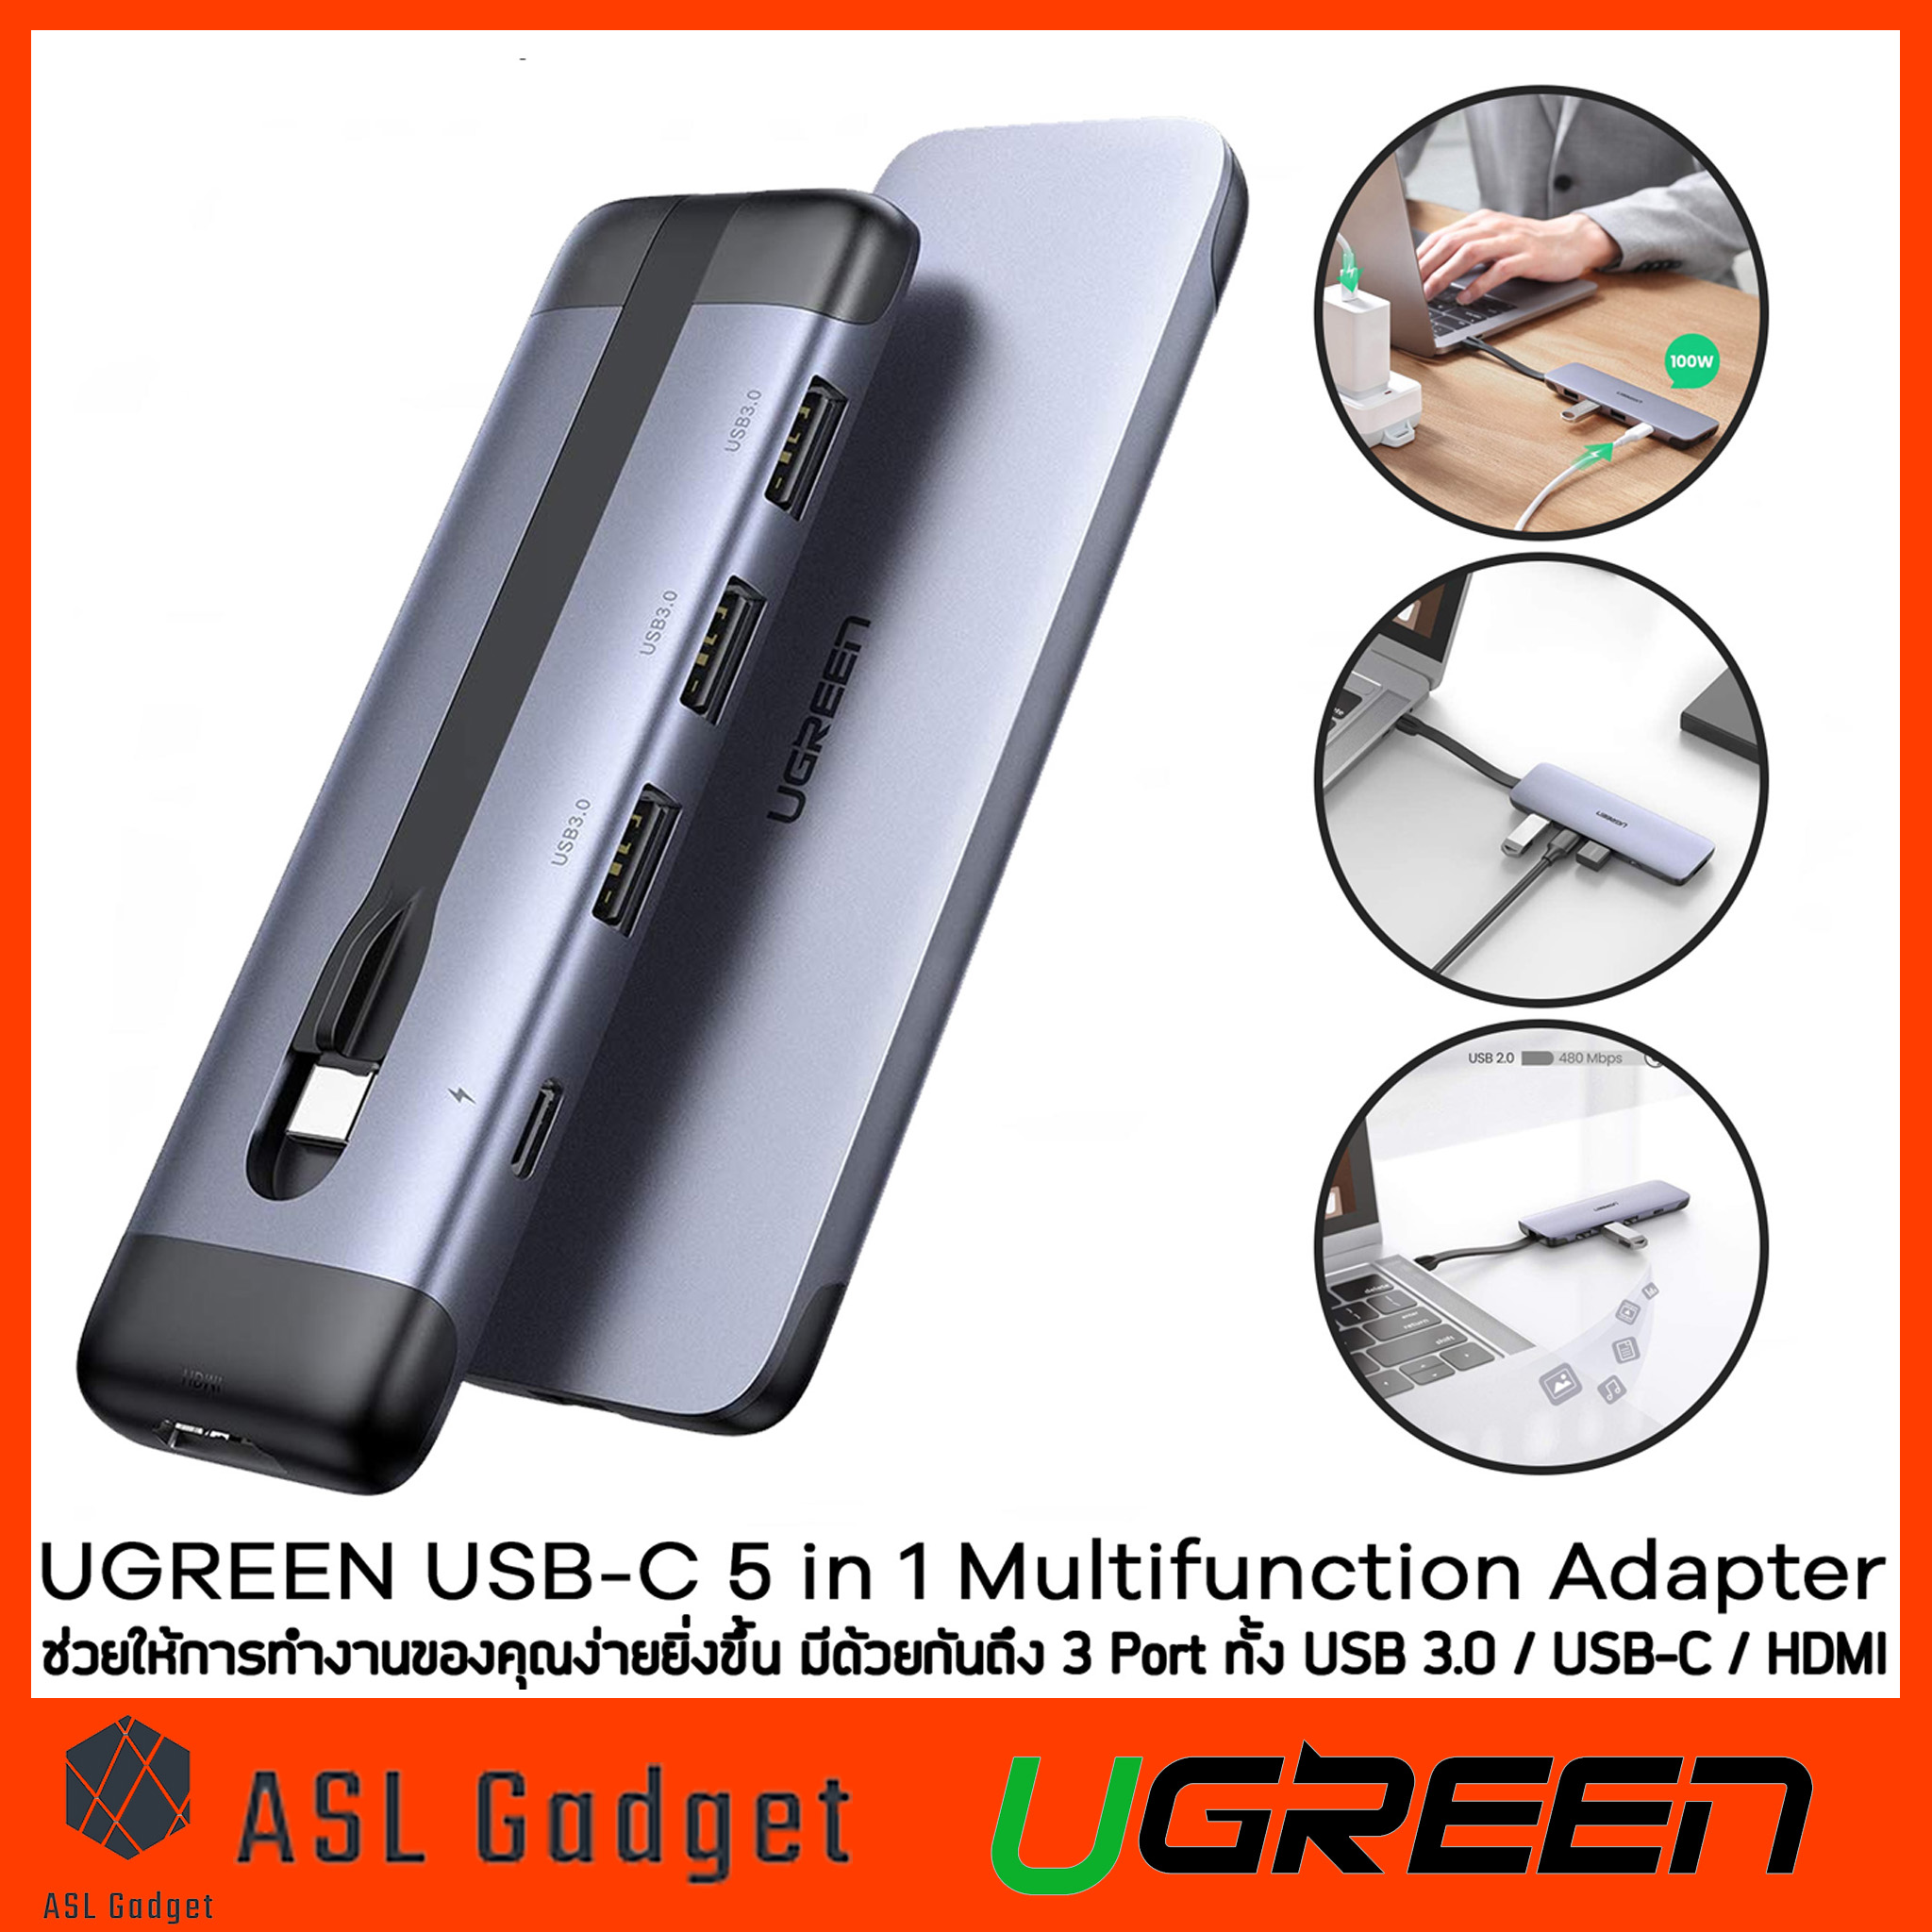 UGREEN USB-C 5 in 1 Multifunction Adapter มีด้วยกันถึง 3 Port ทั้ง USB 3.0 / USB-C / HDMI